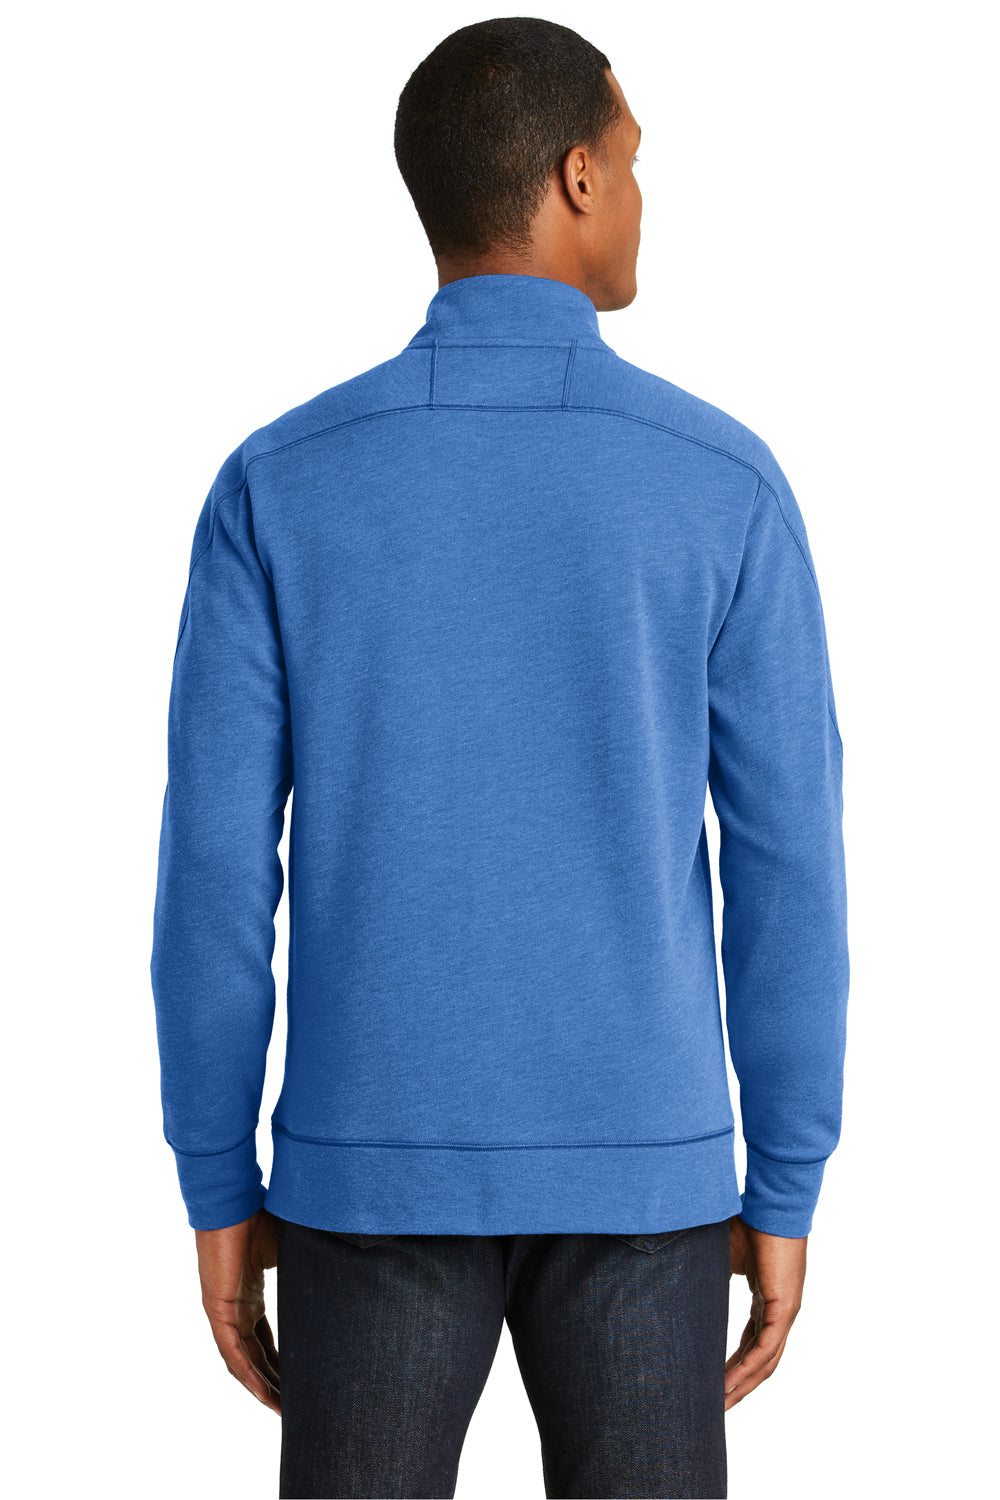 New Era NEA512 Mens Fleece 1/4 Zip Sweatshirt Heather Royal Blue Back